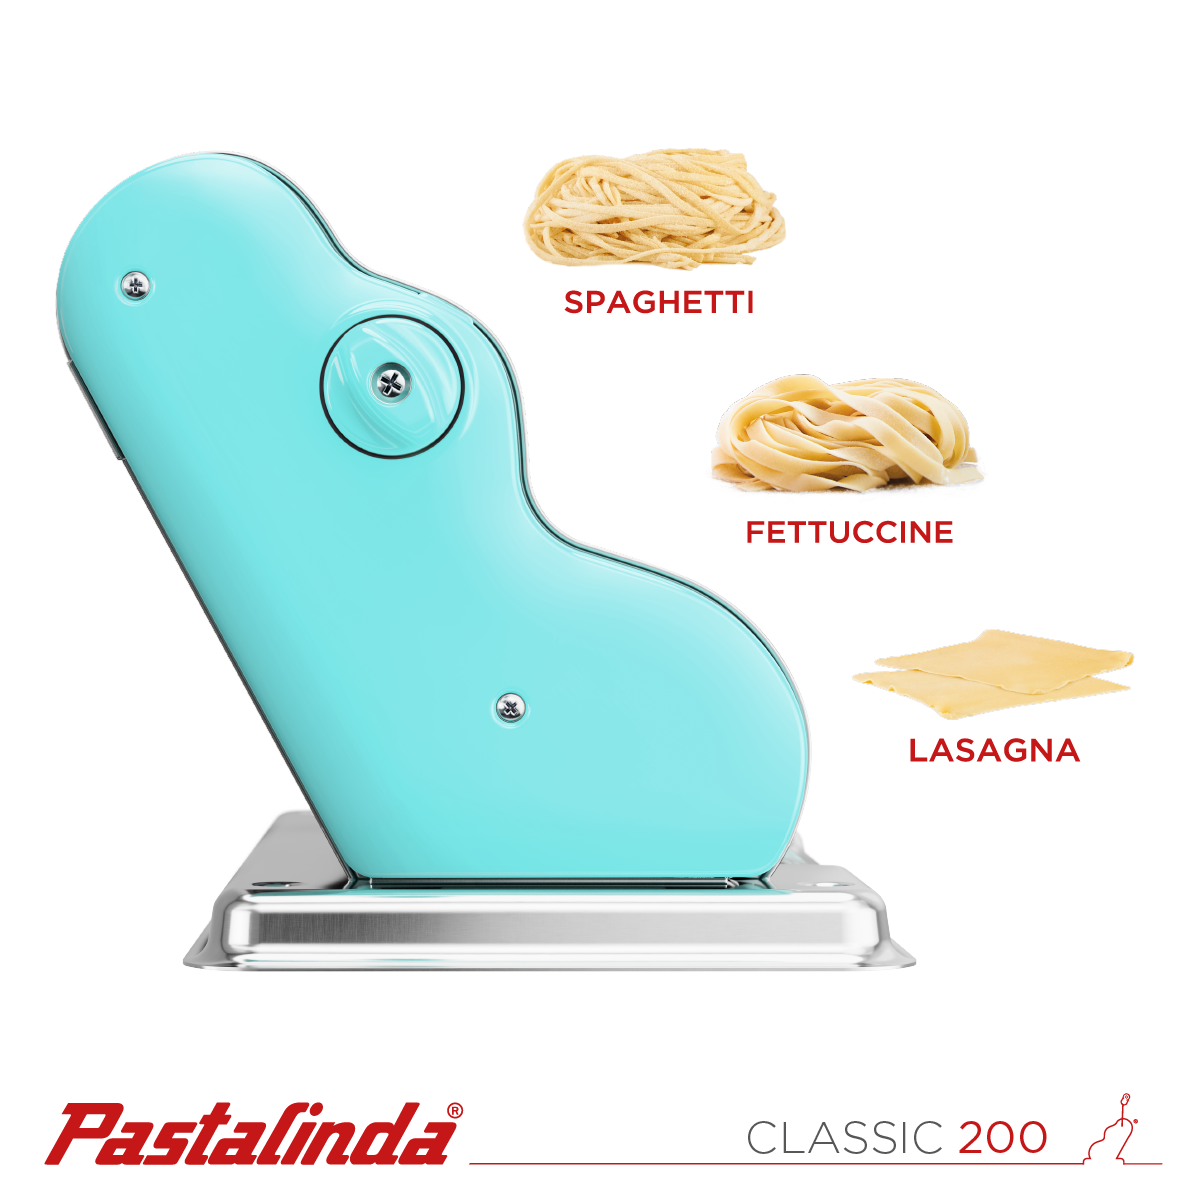 Pastalinda Classic 200 Light Blue Pasta Maker Machine With Hand Crank And Two Clamps - PASTALINDA USA